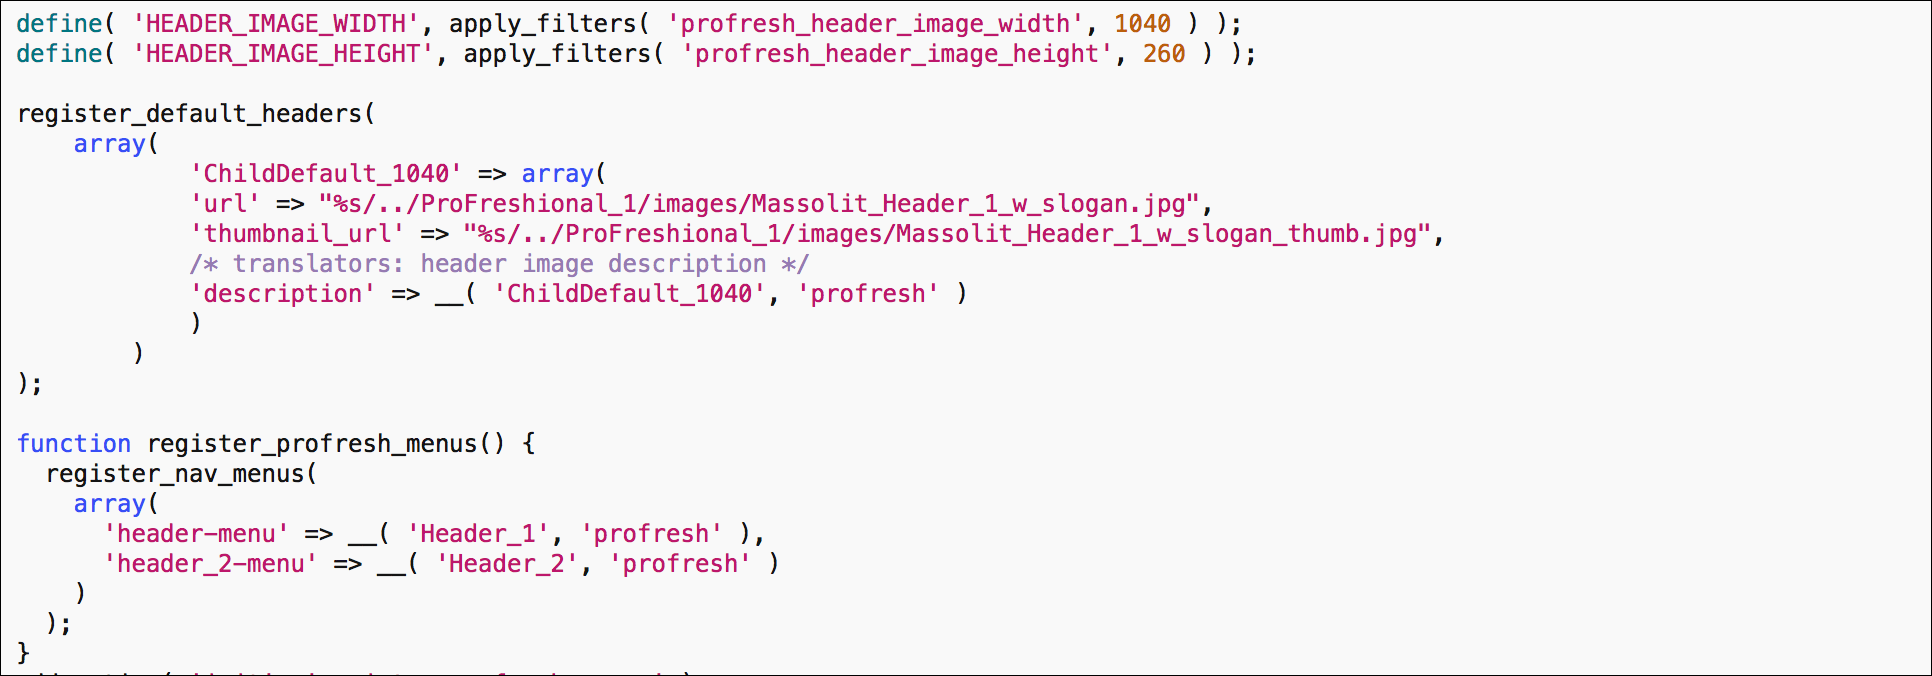 Screenshot: Custom PHP code and screenshots from the 2013 version of massolit-media.com.